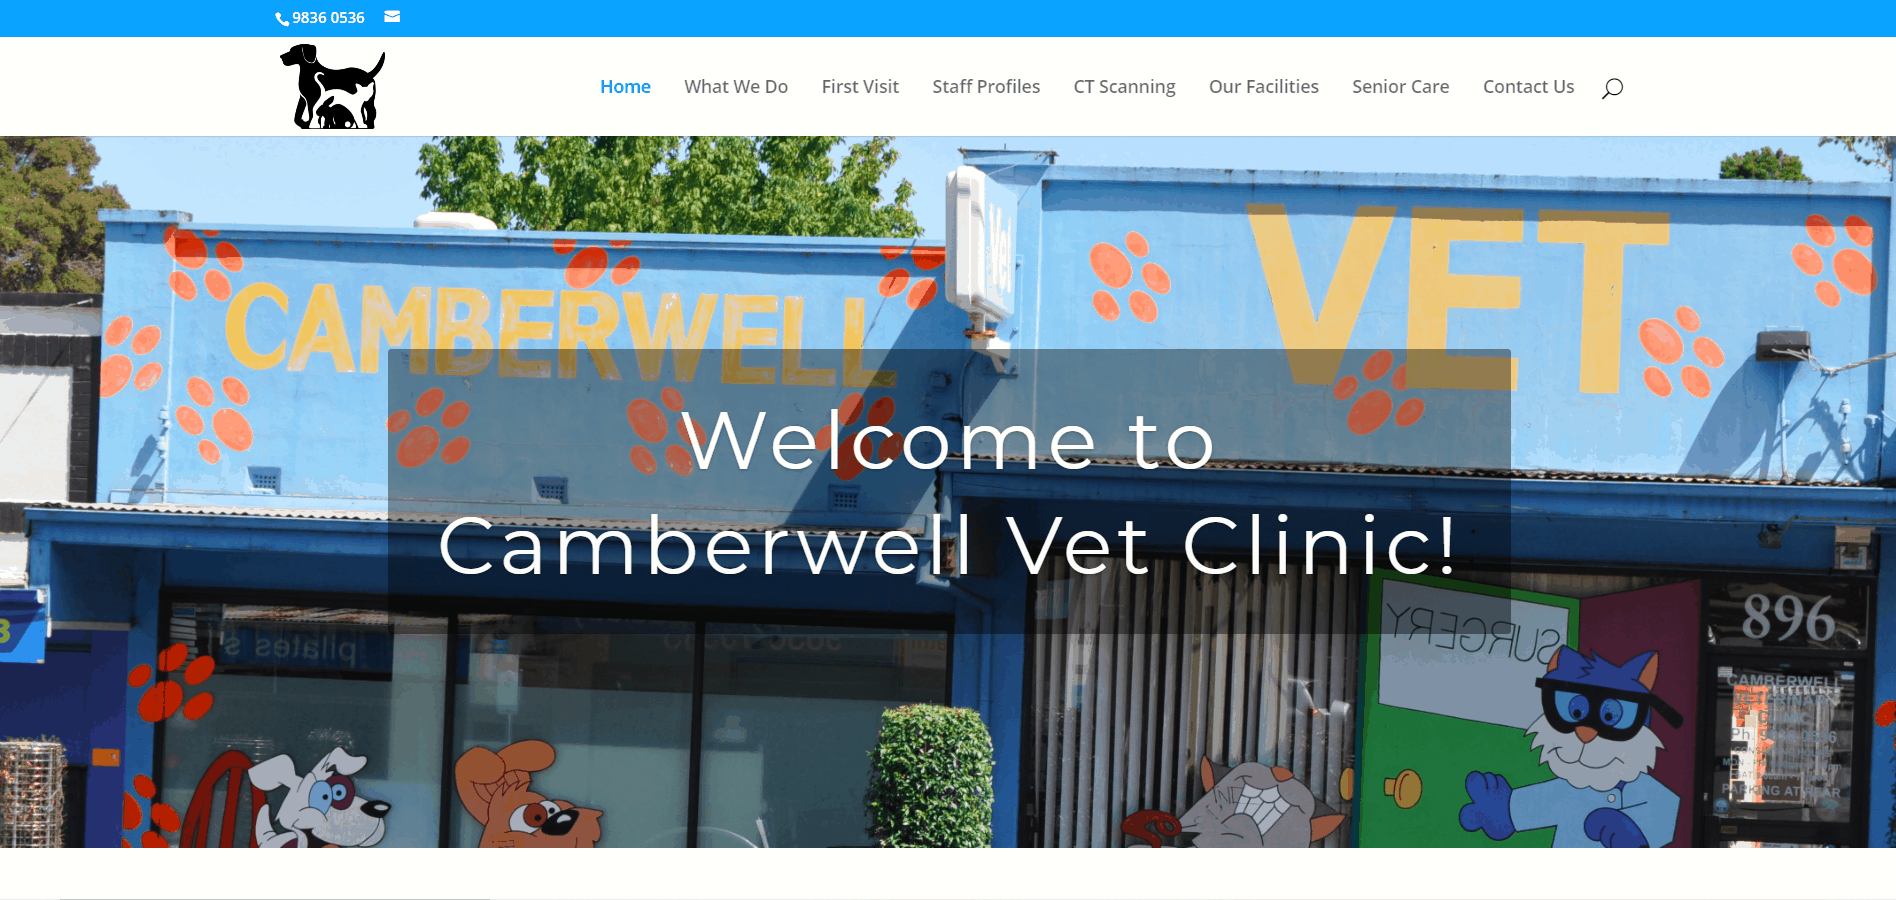 Camberwell Vet Clinic